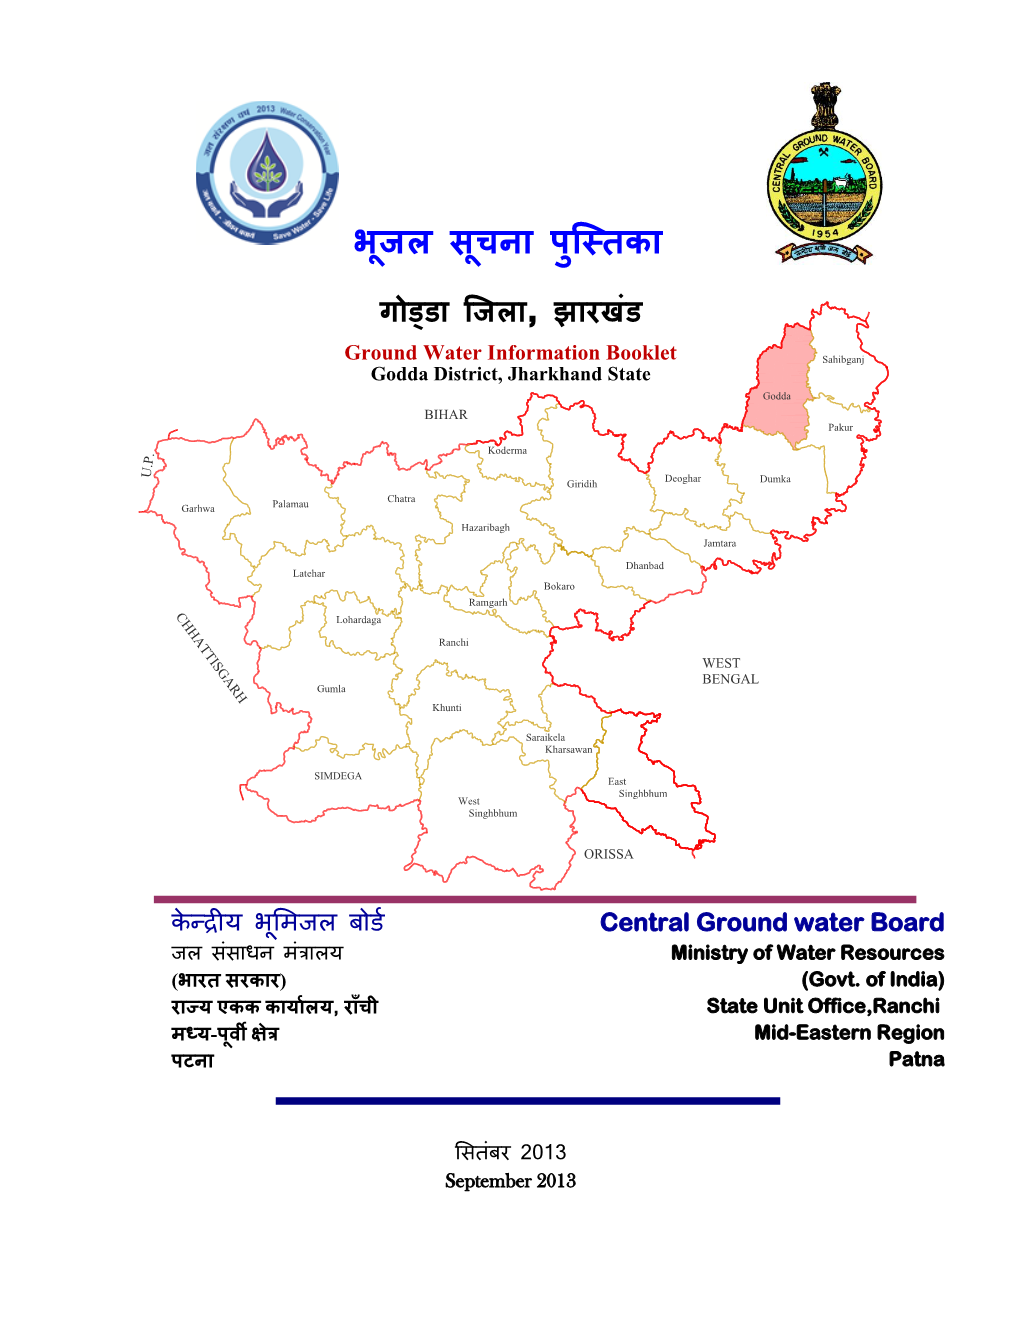 Godda District, Jharkhand State